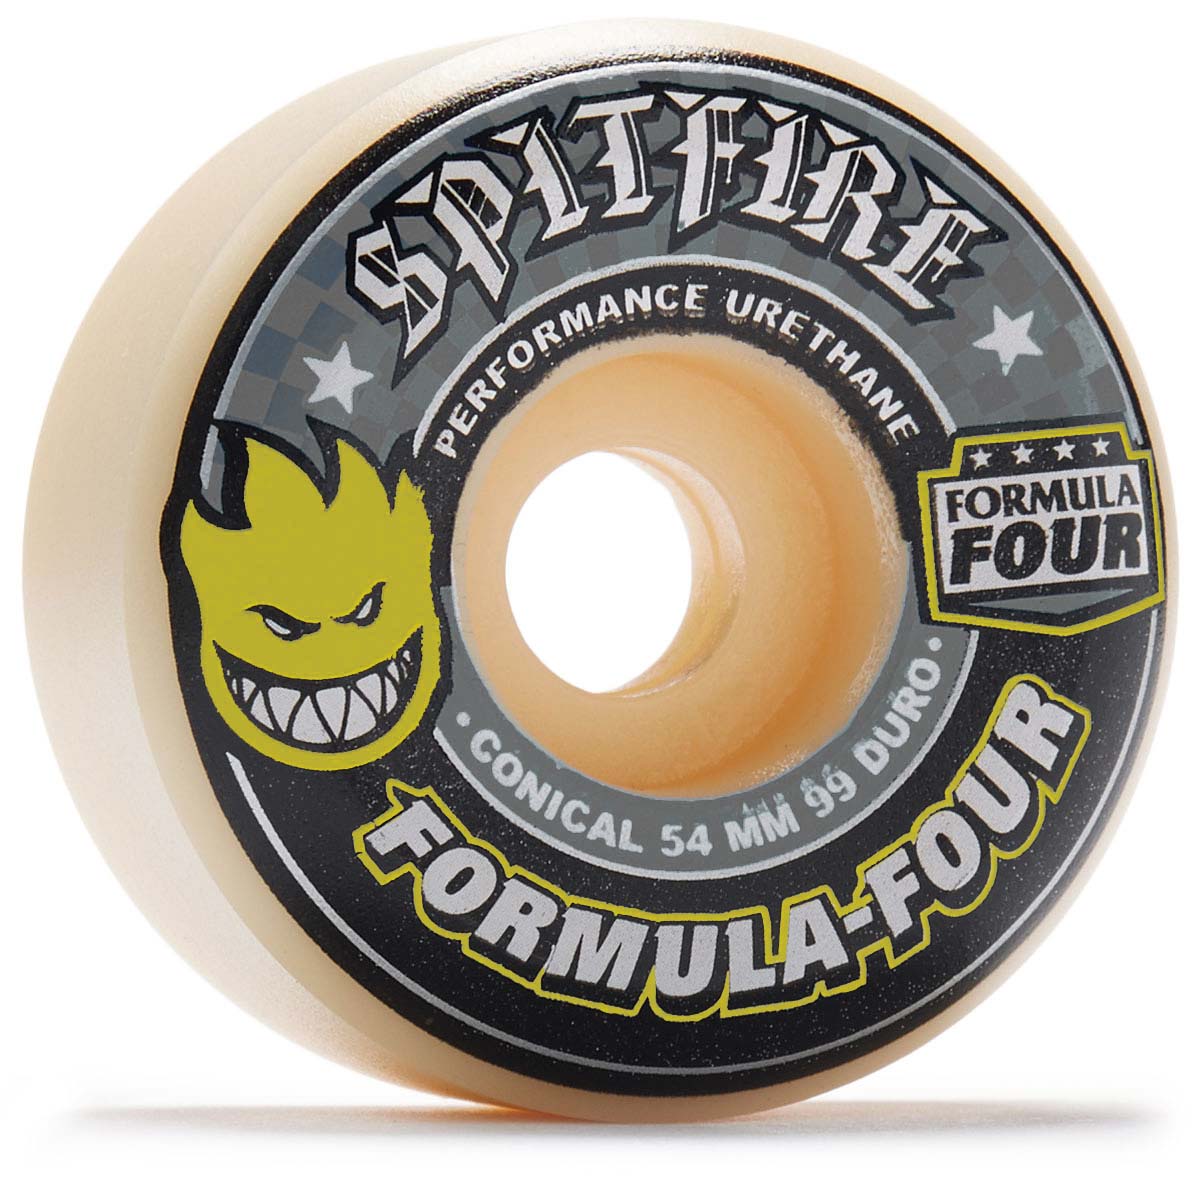 Spitfire F4 99 Conical Skateboard Wheels - 54mm image 1